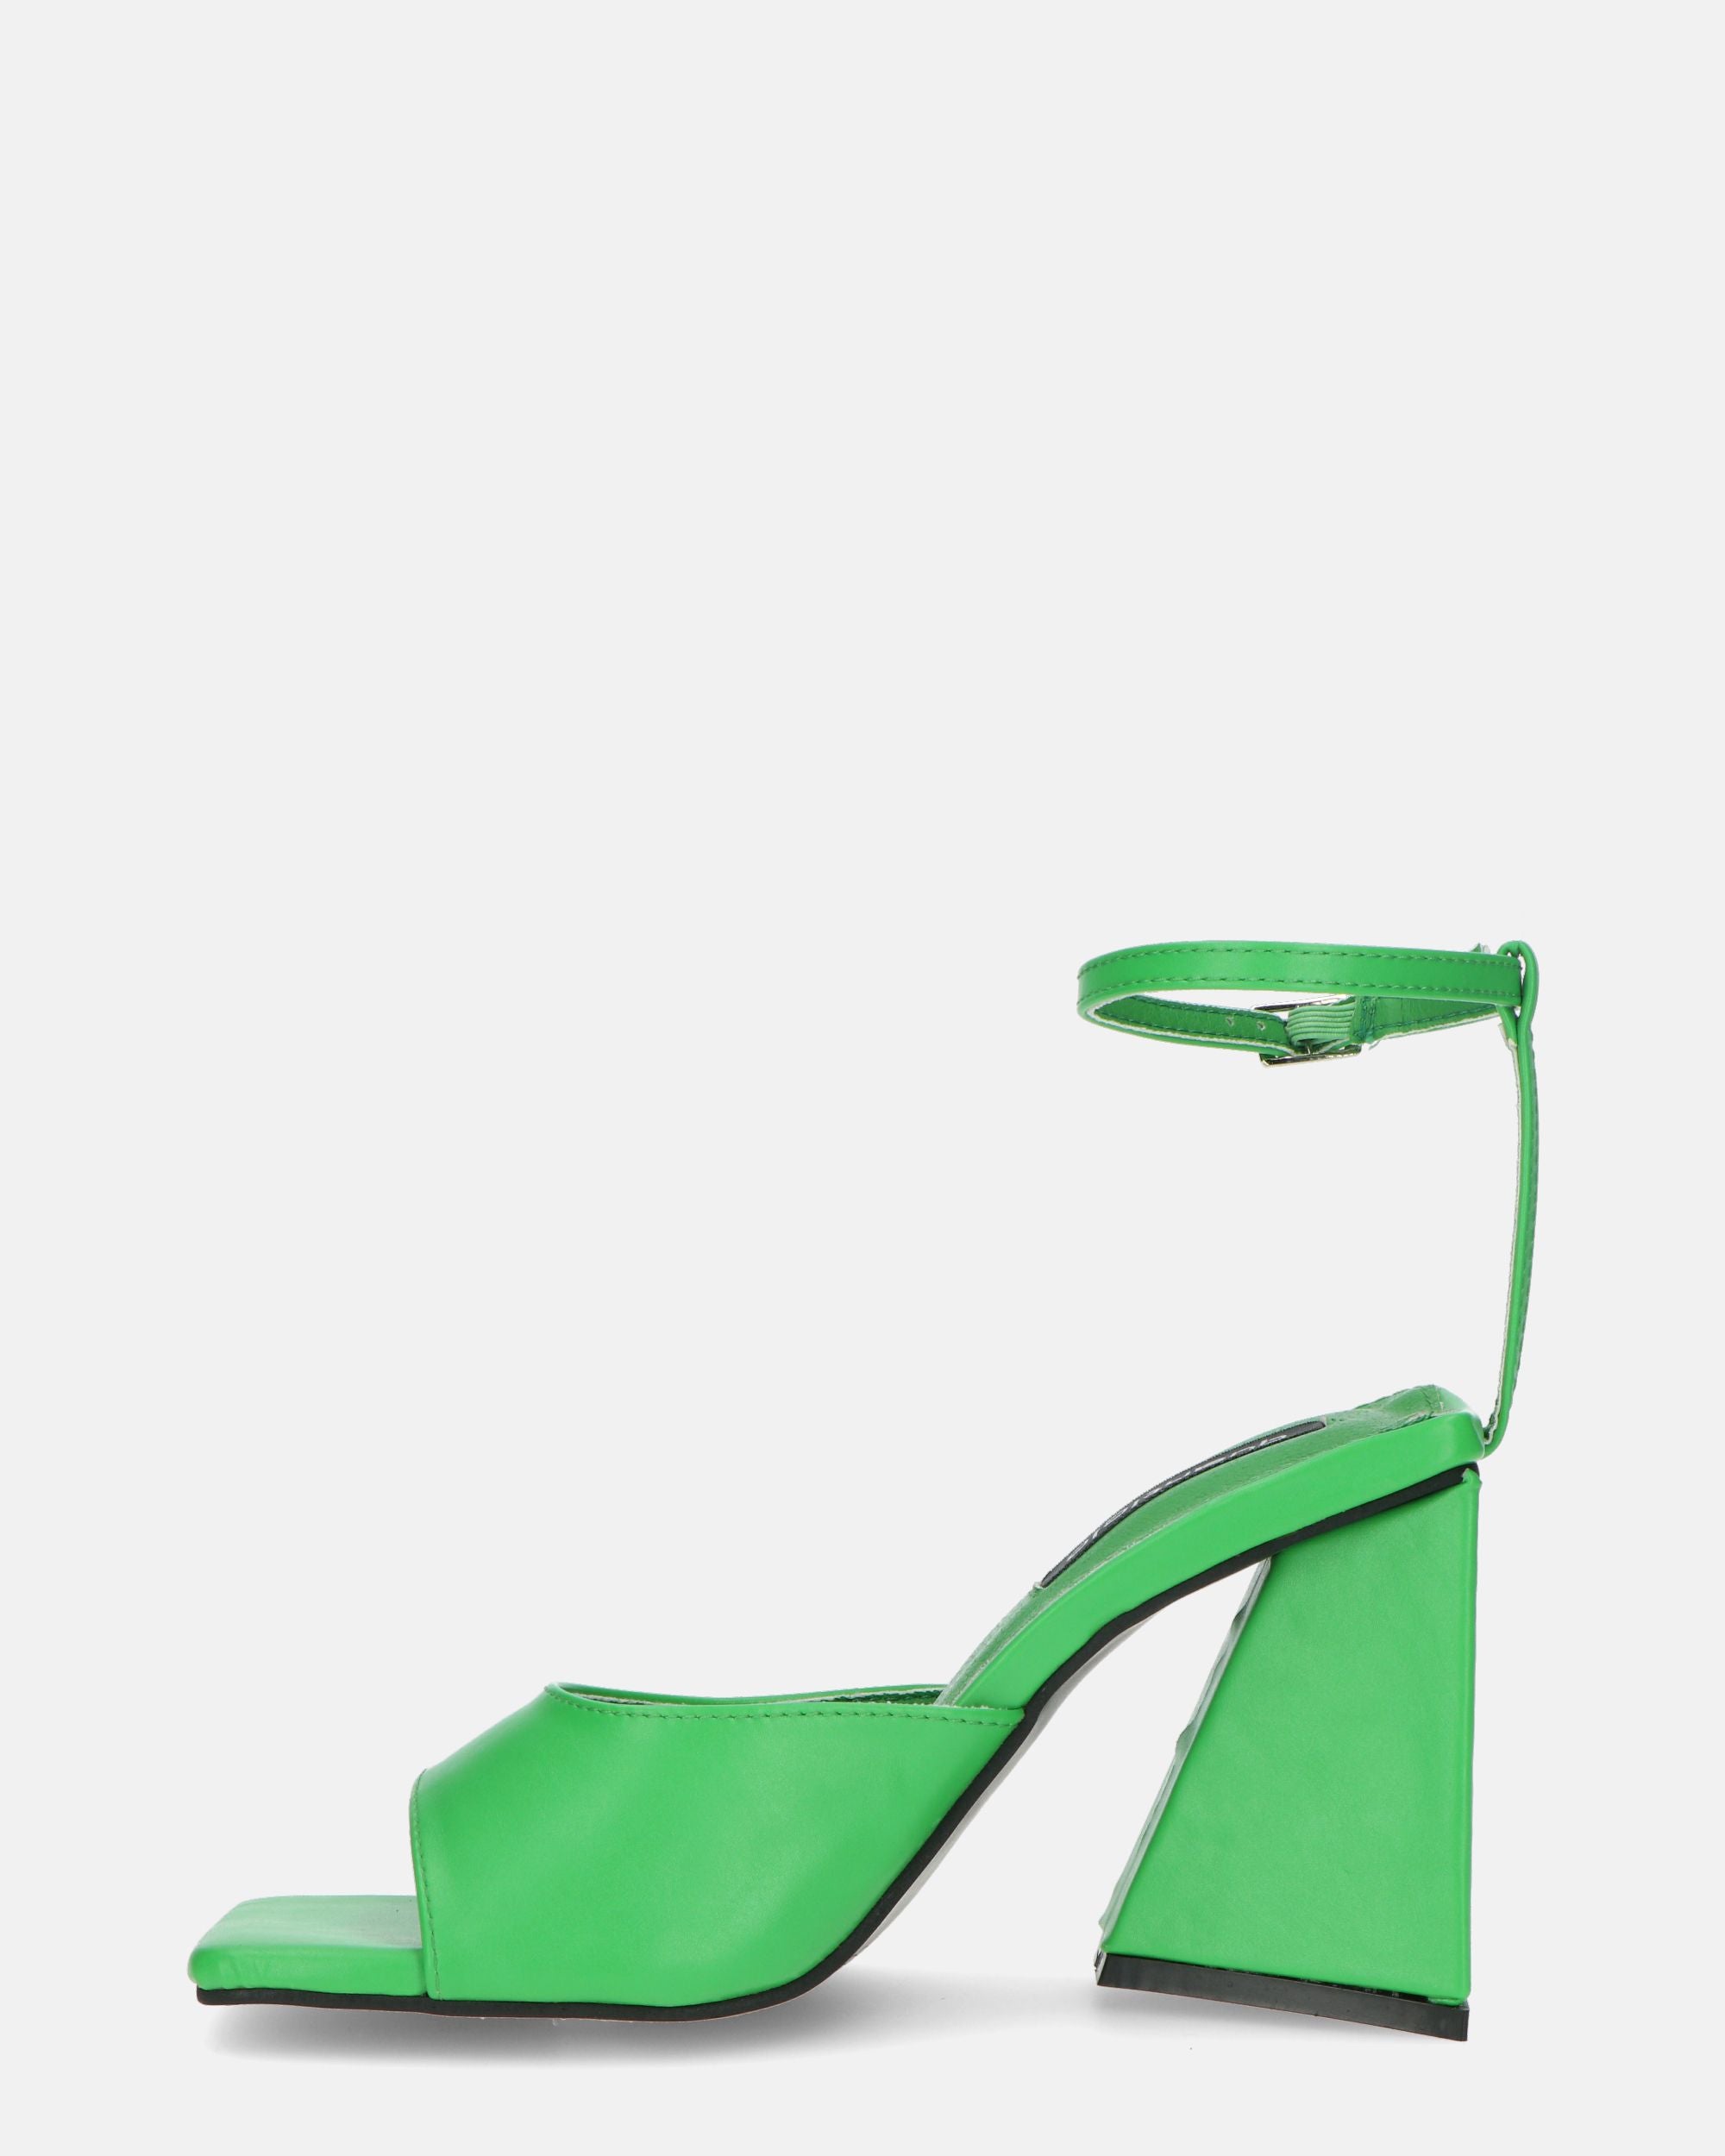 KUBRA - sandali con cinturino in ecopelle verde